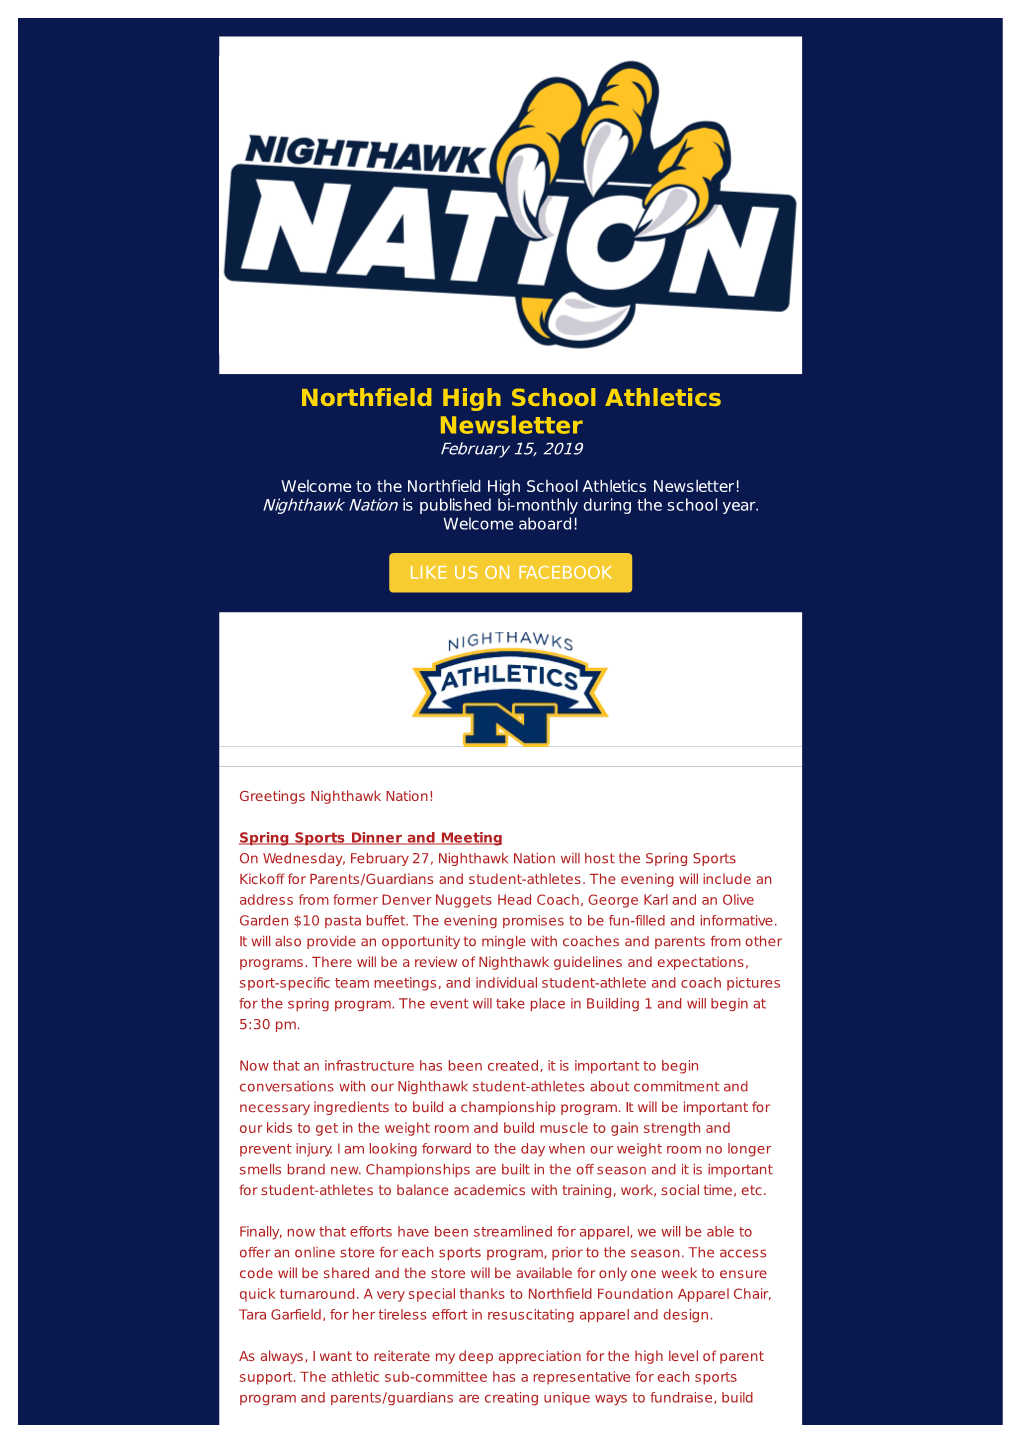 Northfield High School Athletics Newsletter February 15, 2019